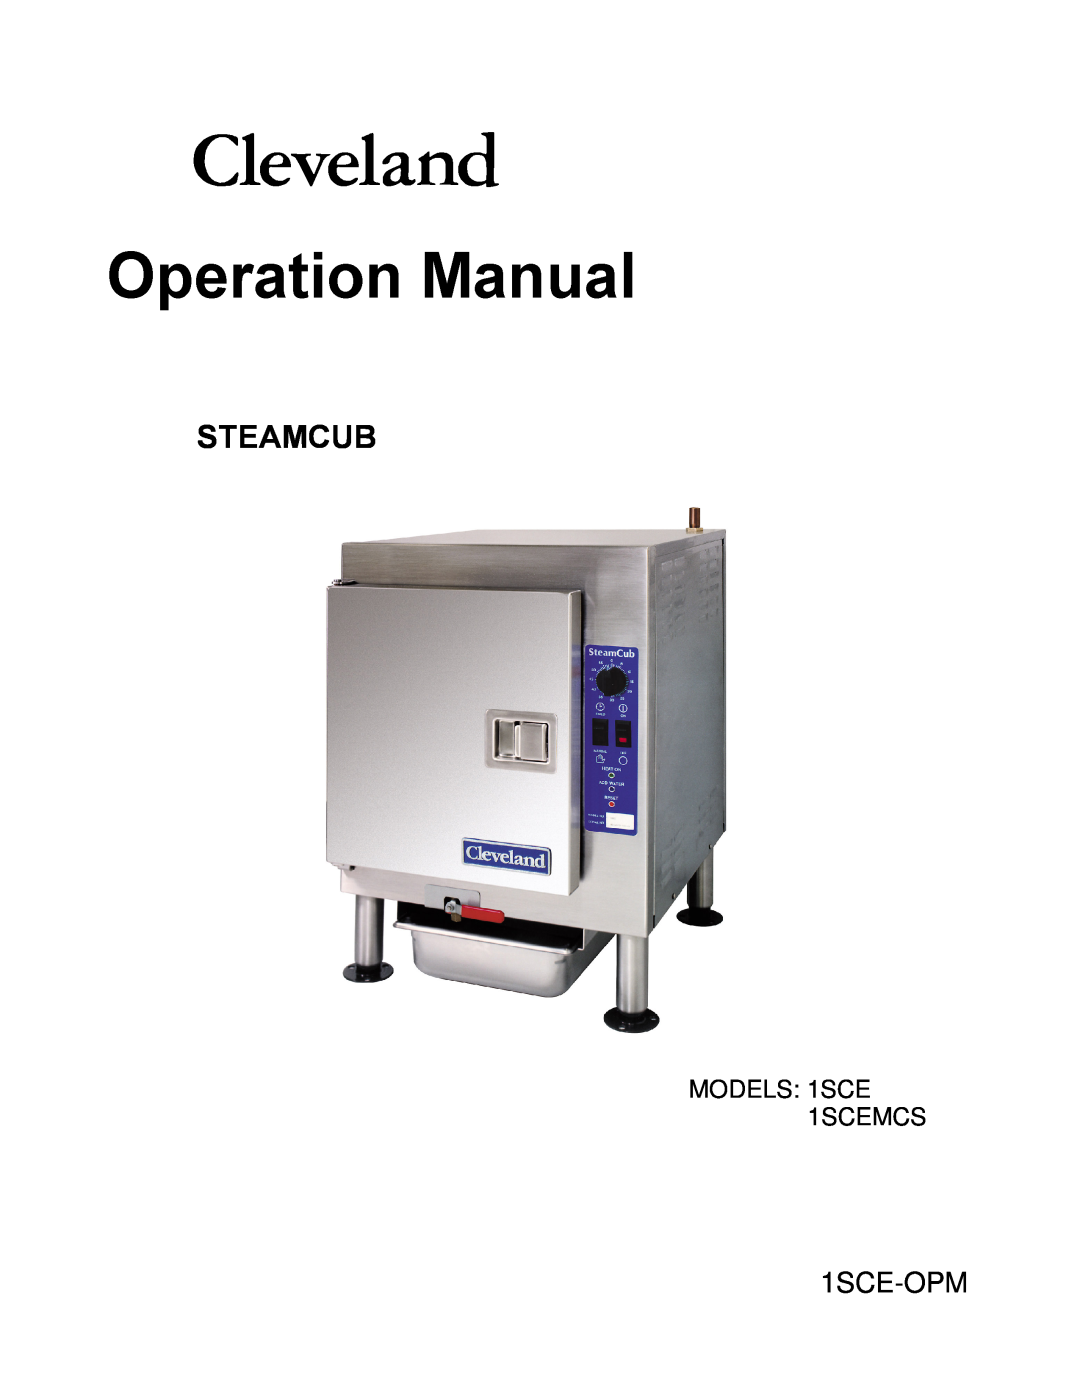 Cleveland Range 1SCE-OPM manual Steamcub, MODELS 1SCE 1SCEMCS 